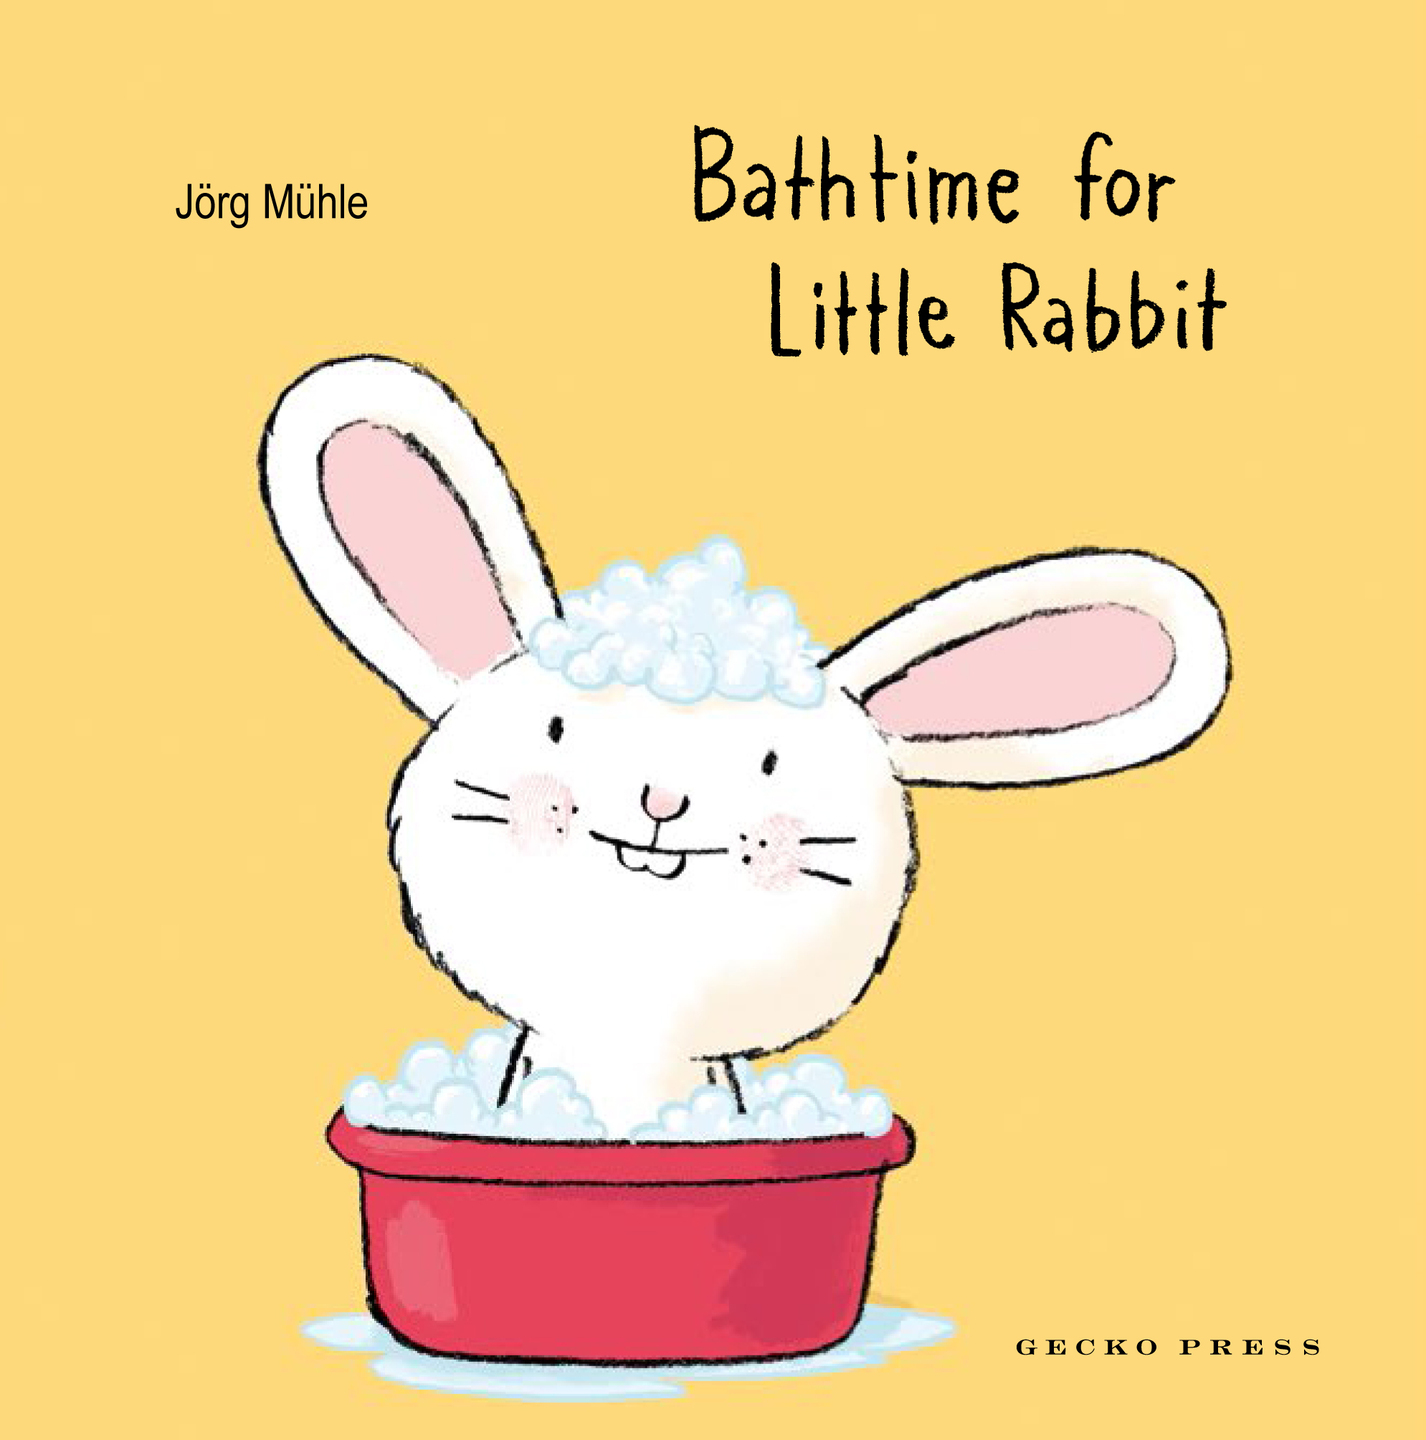 Bathtime for Little Rabbit | Gecko Press